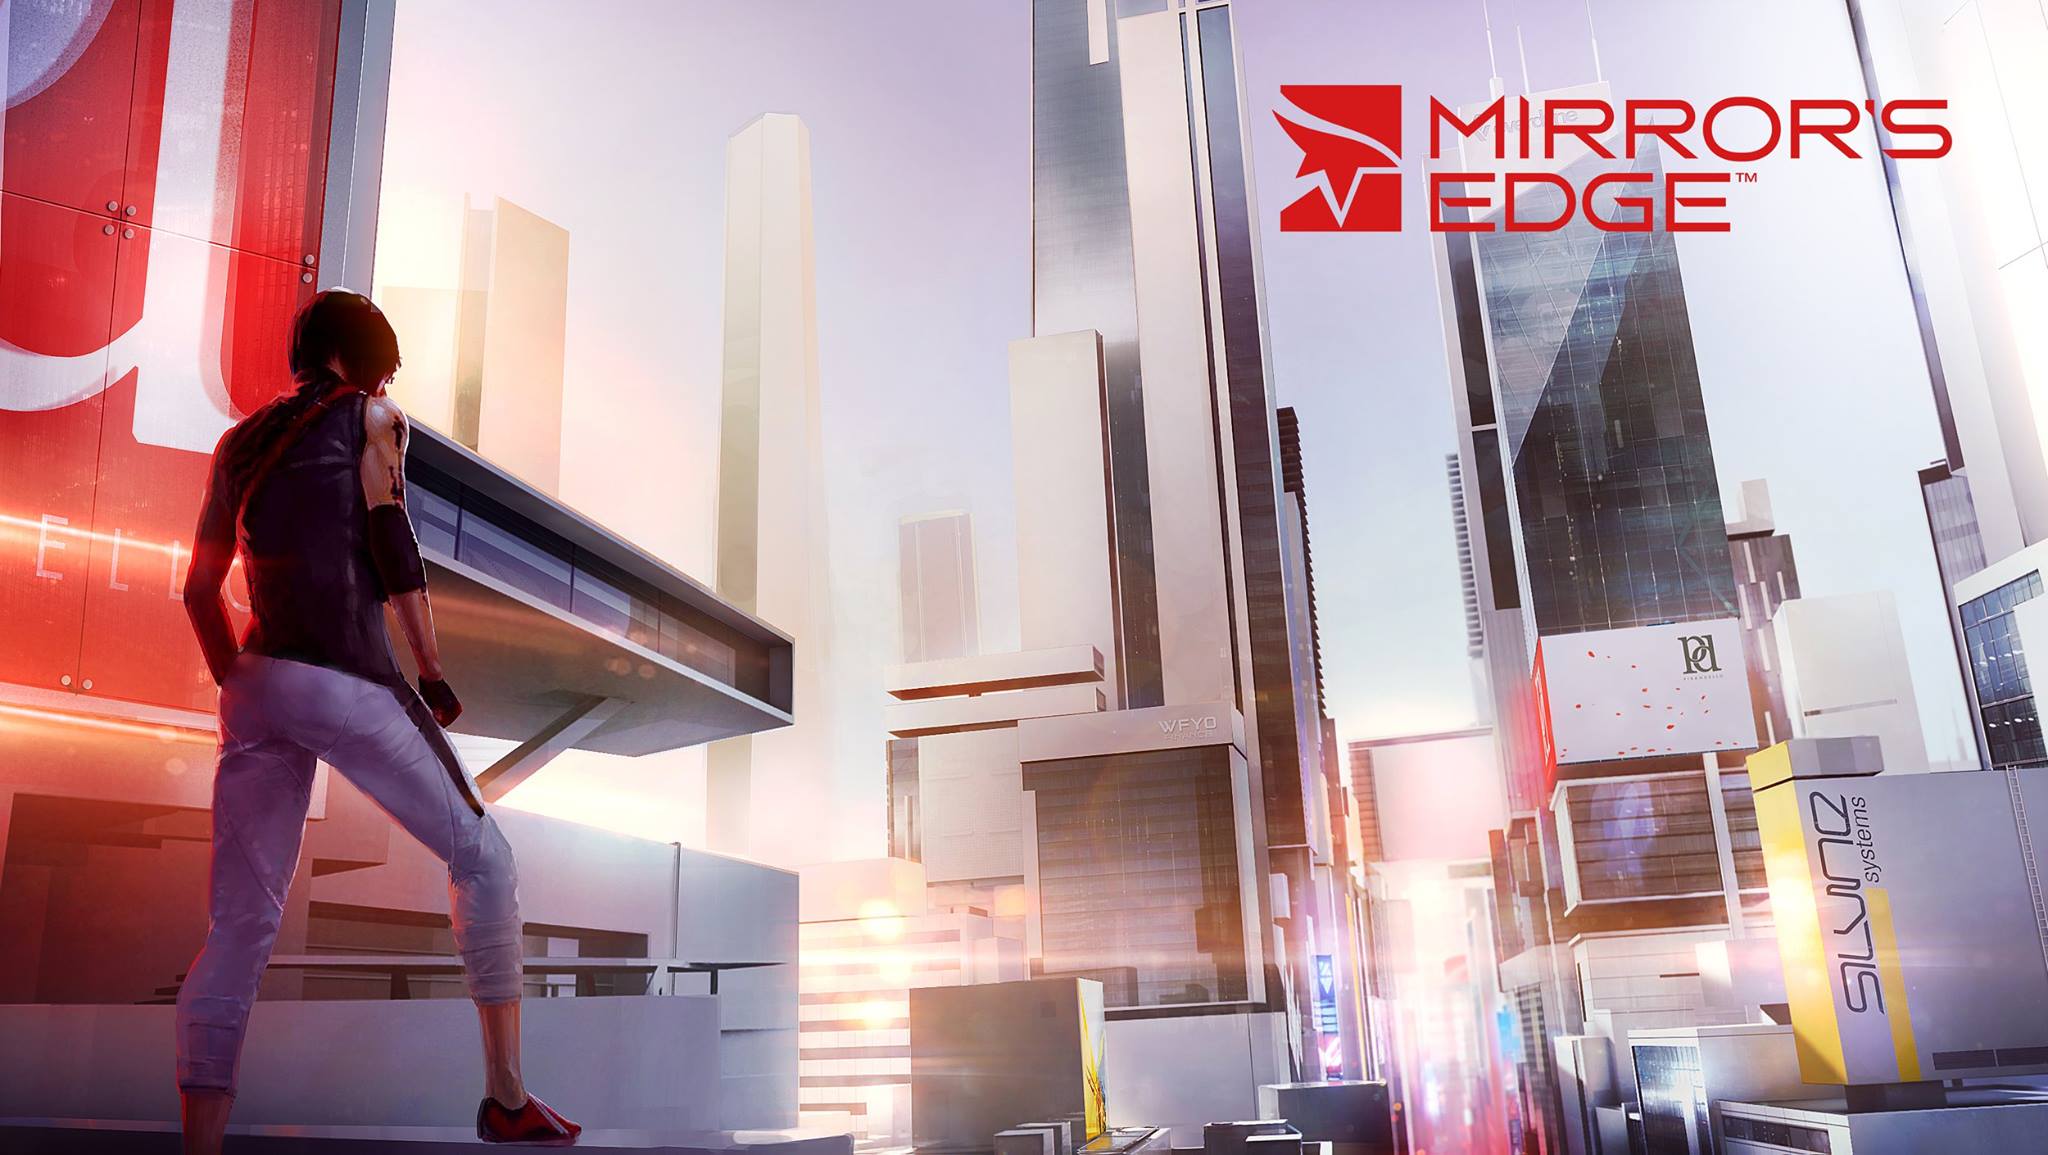 EA تحذف Mirror's Edge من قائمة الألعاب التي ستحذف قريباً من المتاجر الرقمية